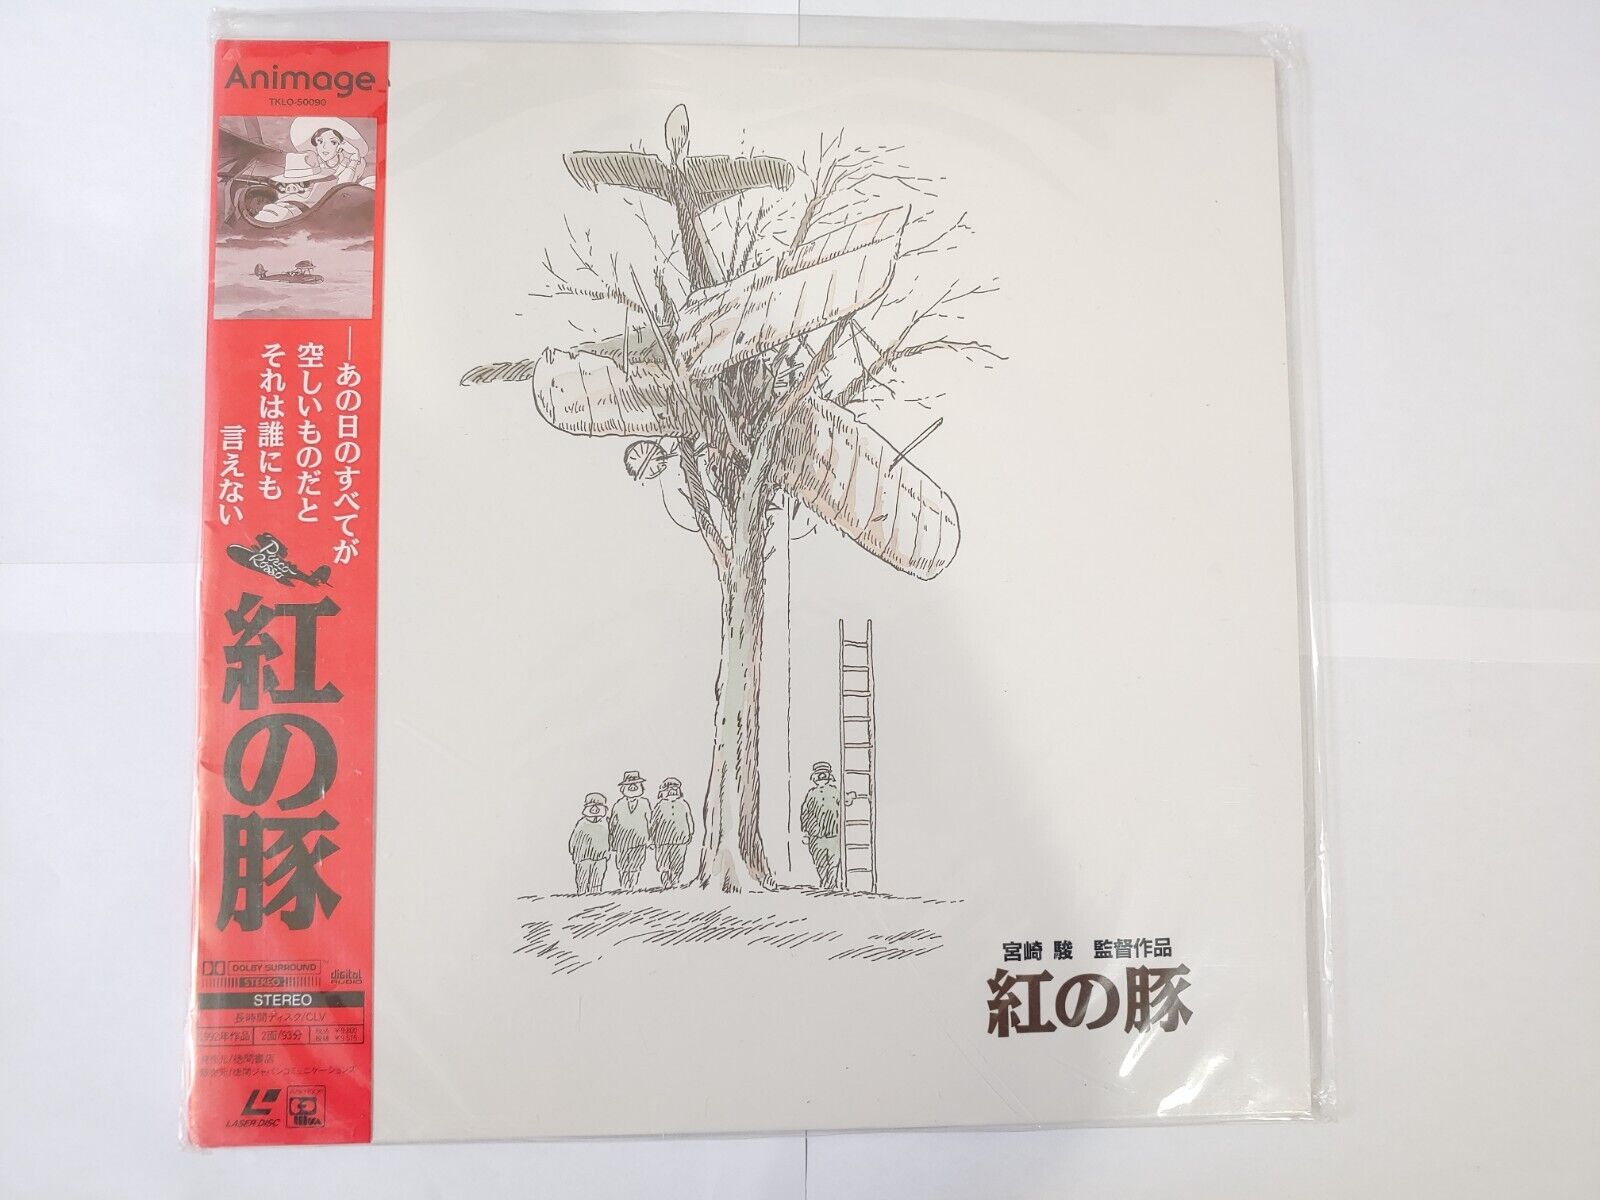 Various Studio Ghibli Hayao Miyazaki Movie Japan Anime Laserdisc LD with Obi